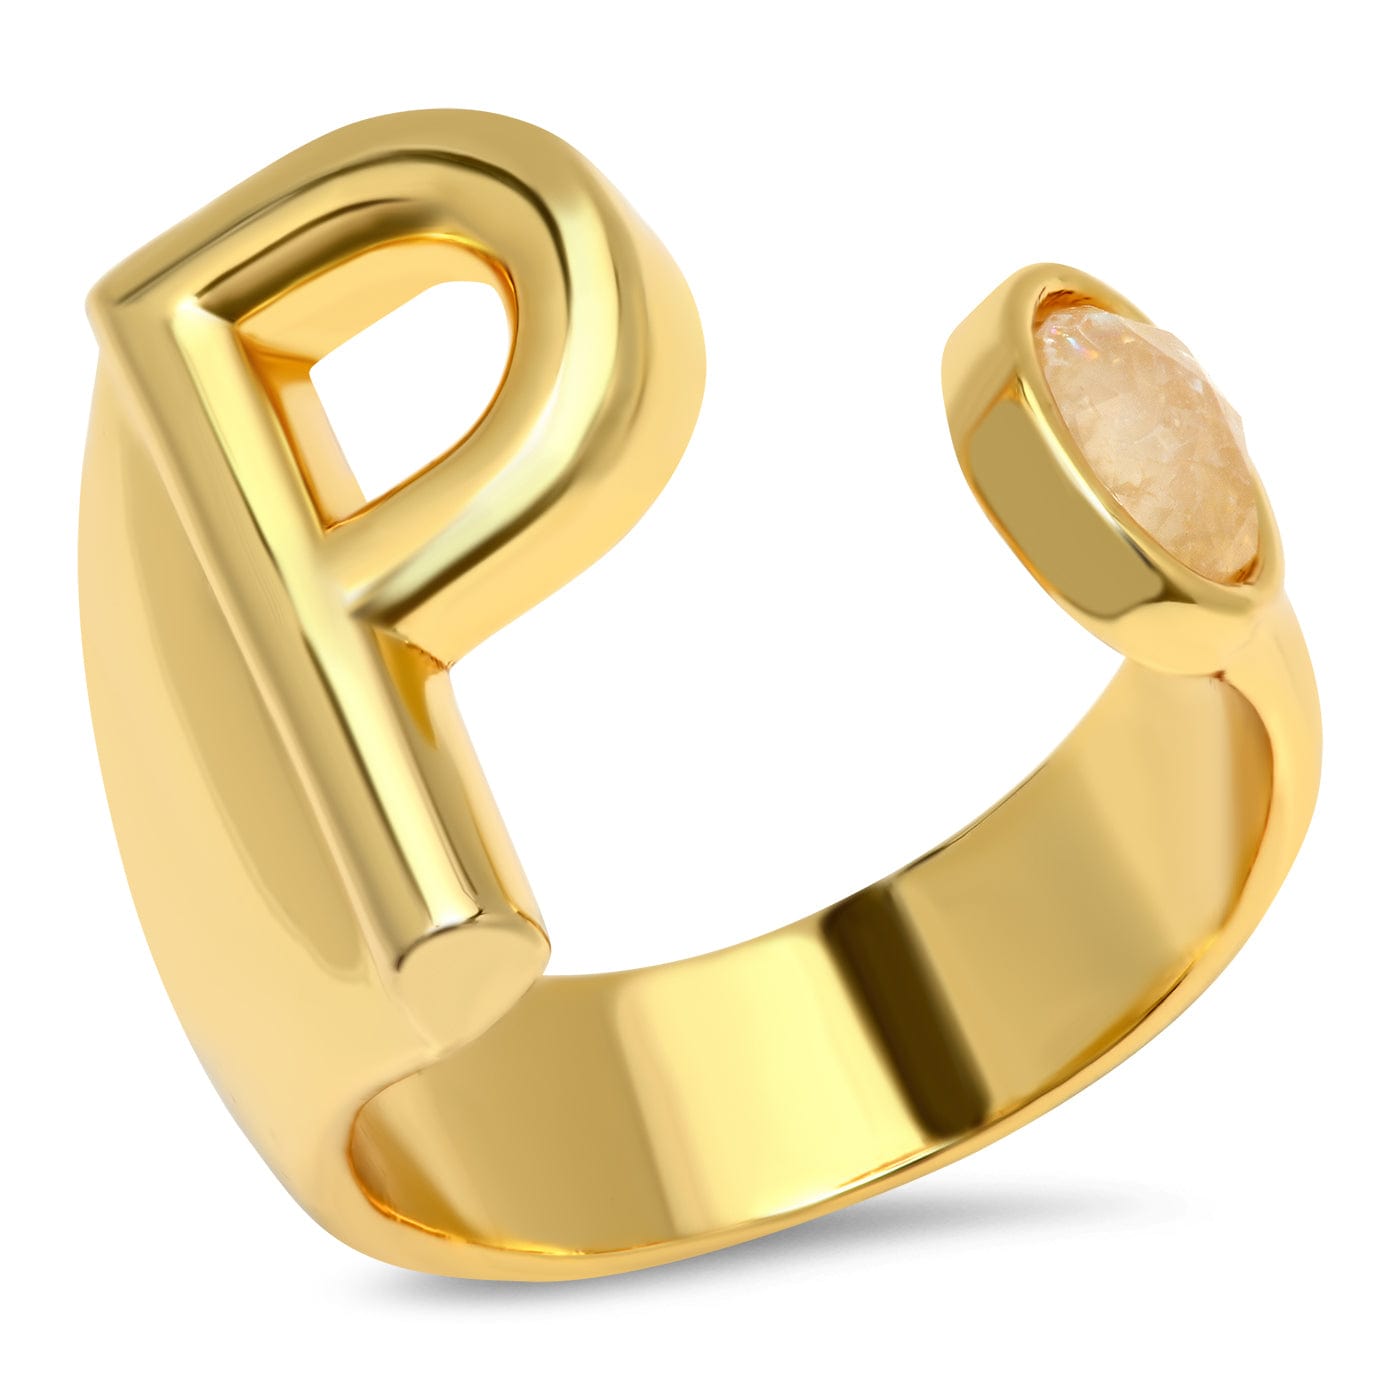 TAI JEWELRY Rings P Initial Wrap Ring